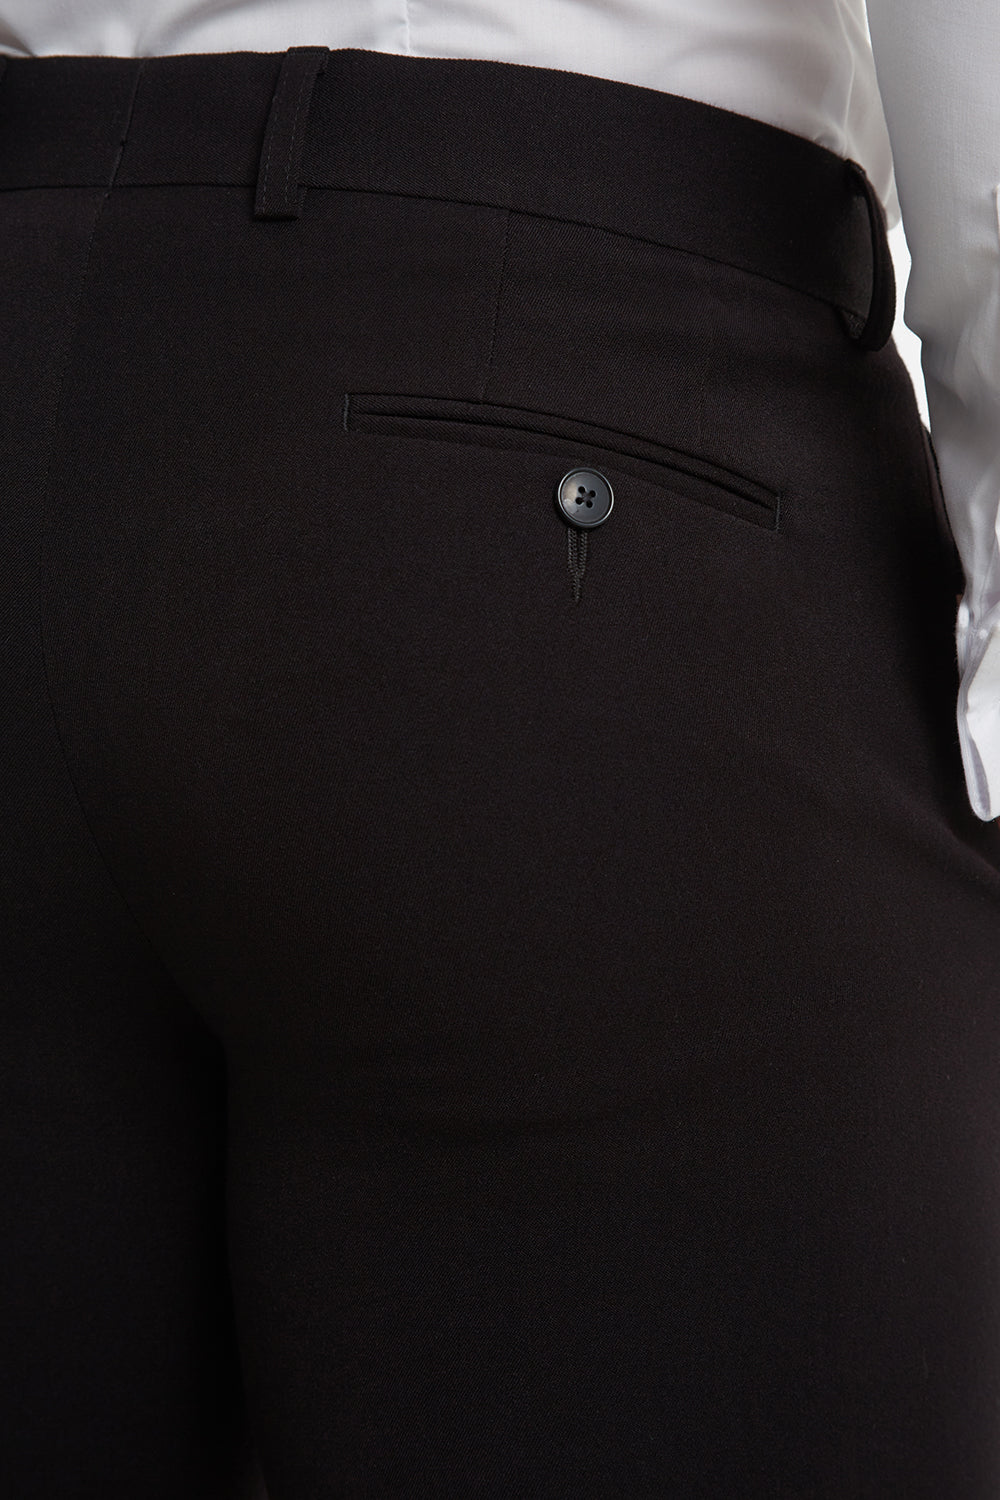 Buy Bell Bottom formal pants for Men Online in India | Women Style Wear